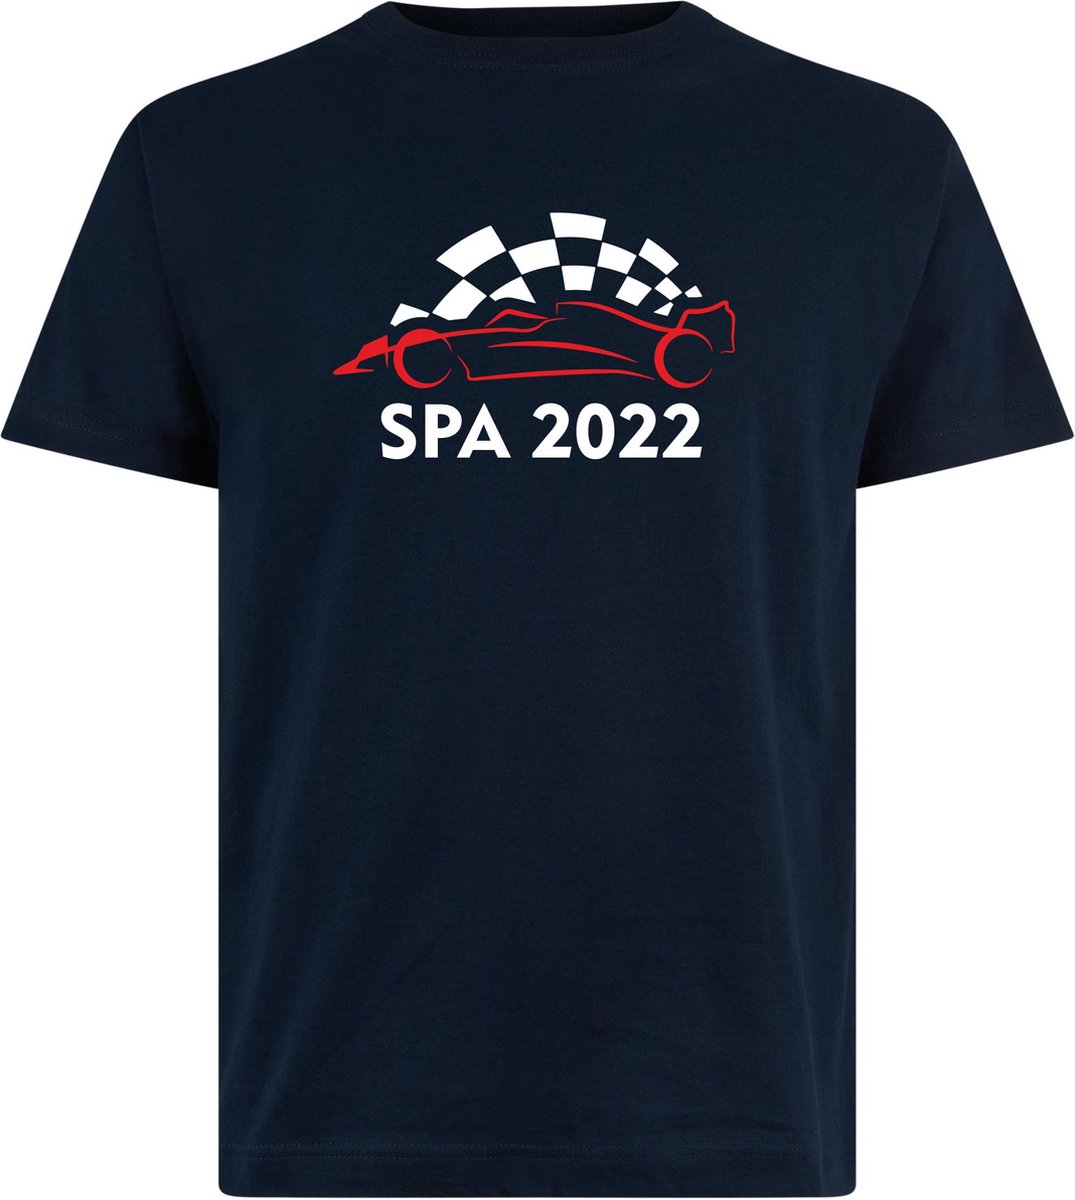 T-shirt kinderen Spa 2022 met raceauto | Max Verstappen / Red Bull Racing / Formule 1 fan | Grand Prix Circuit Spa-Francorchamps | kleding shirt | Navy | maat 128